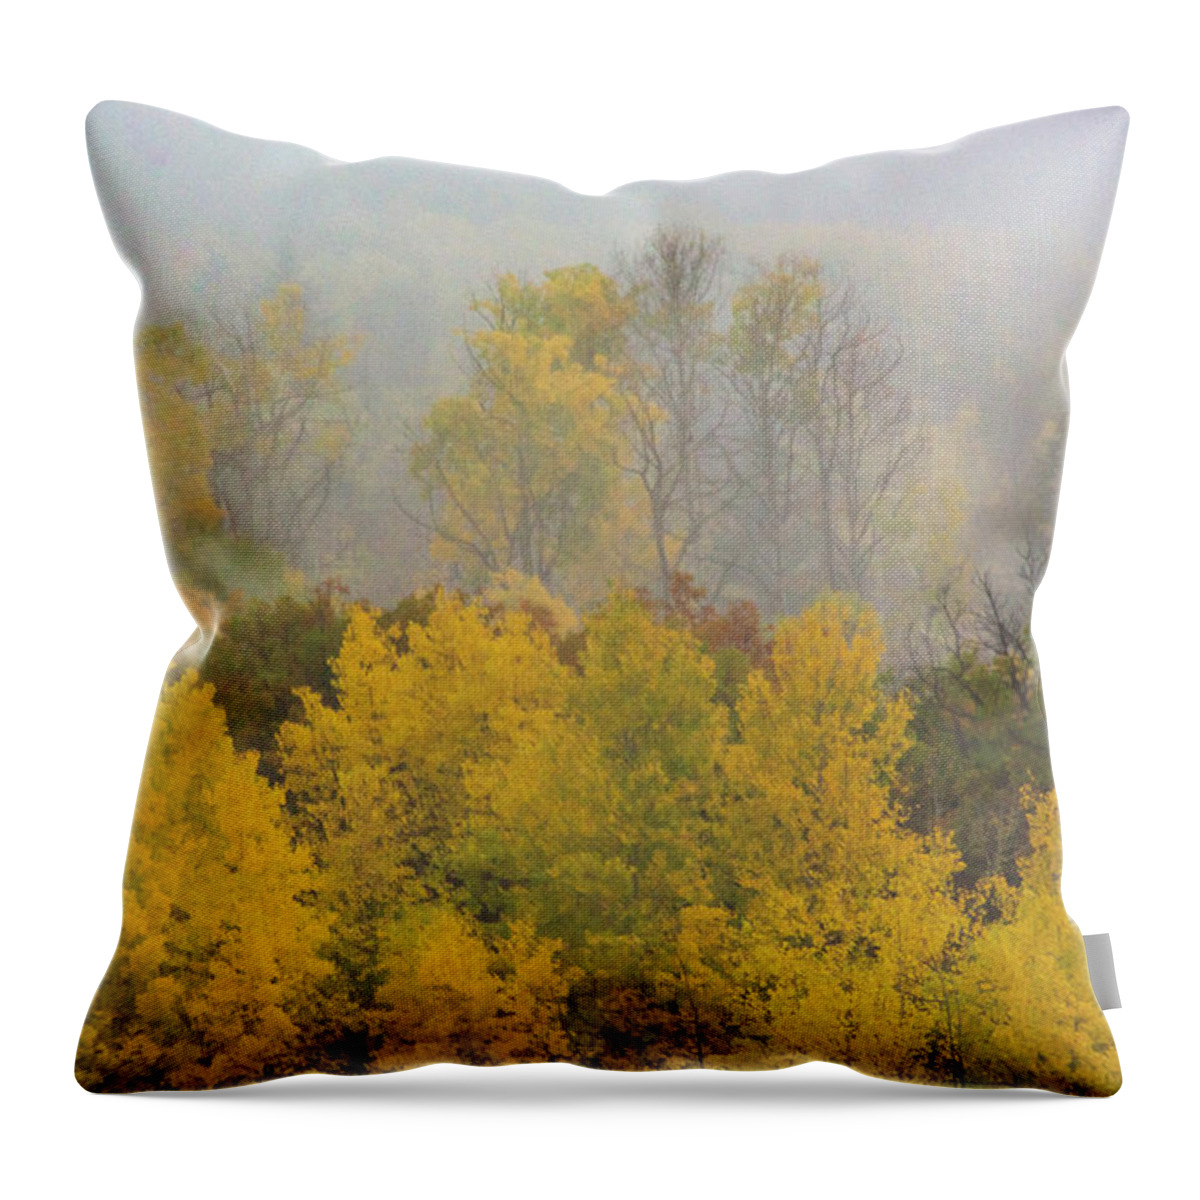 America Throw Pillow featuring the photograph Aspen Trees In Fog by John De Bord